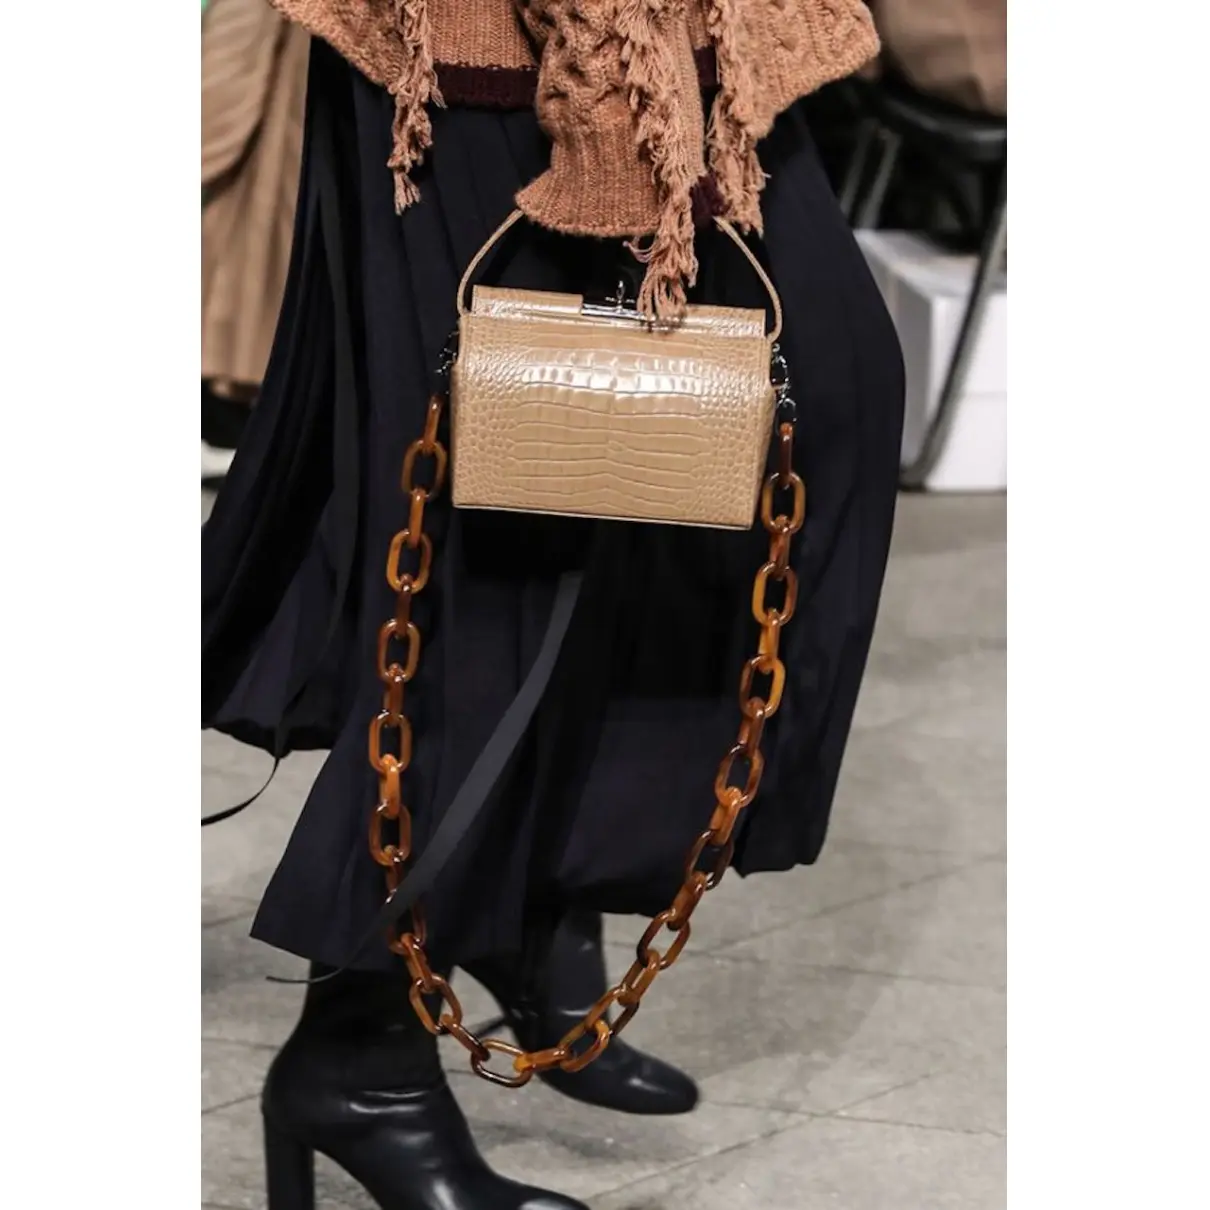 Buy gu_de Leather handbag online